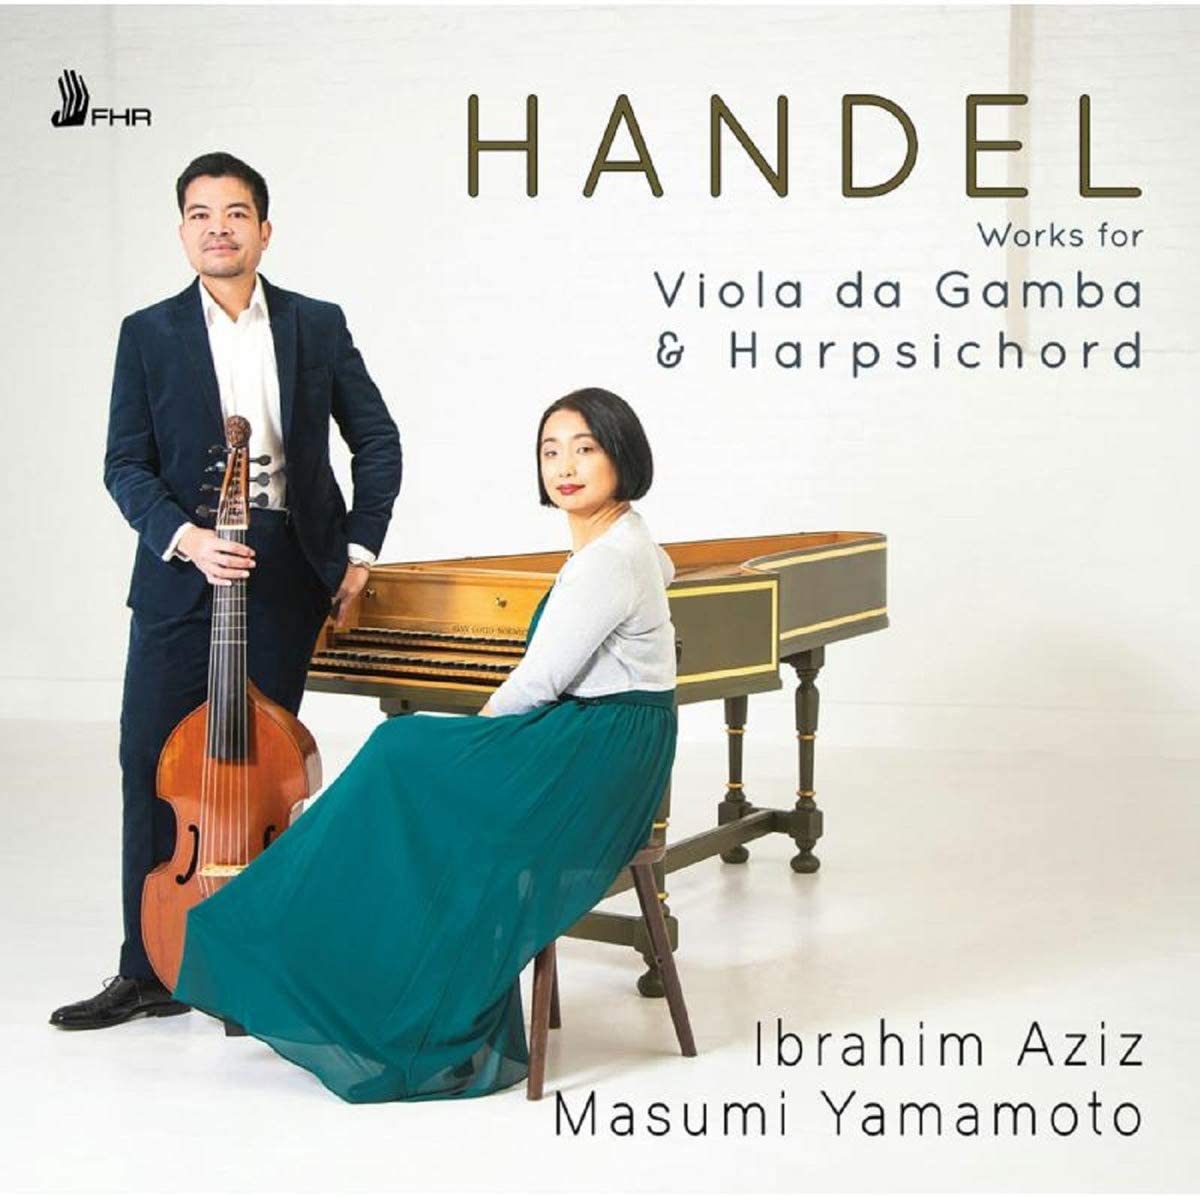 CD cover of Handel gamba sonatas recording by Aziz and Yamamoto